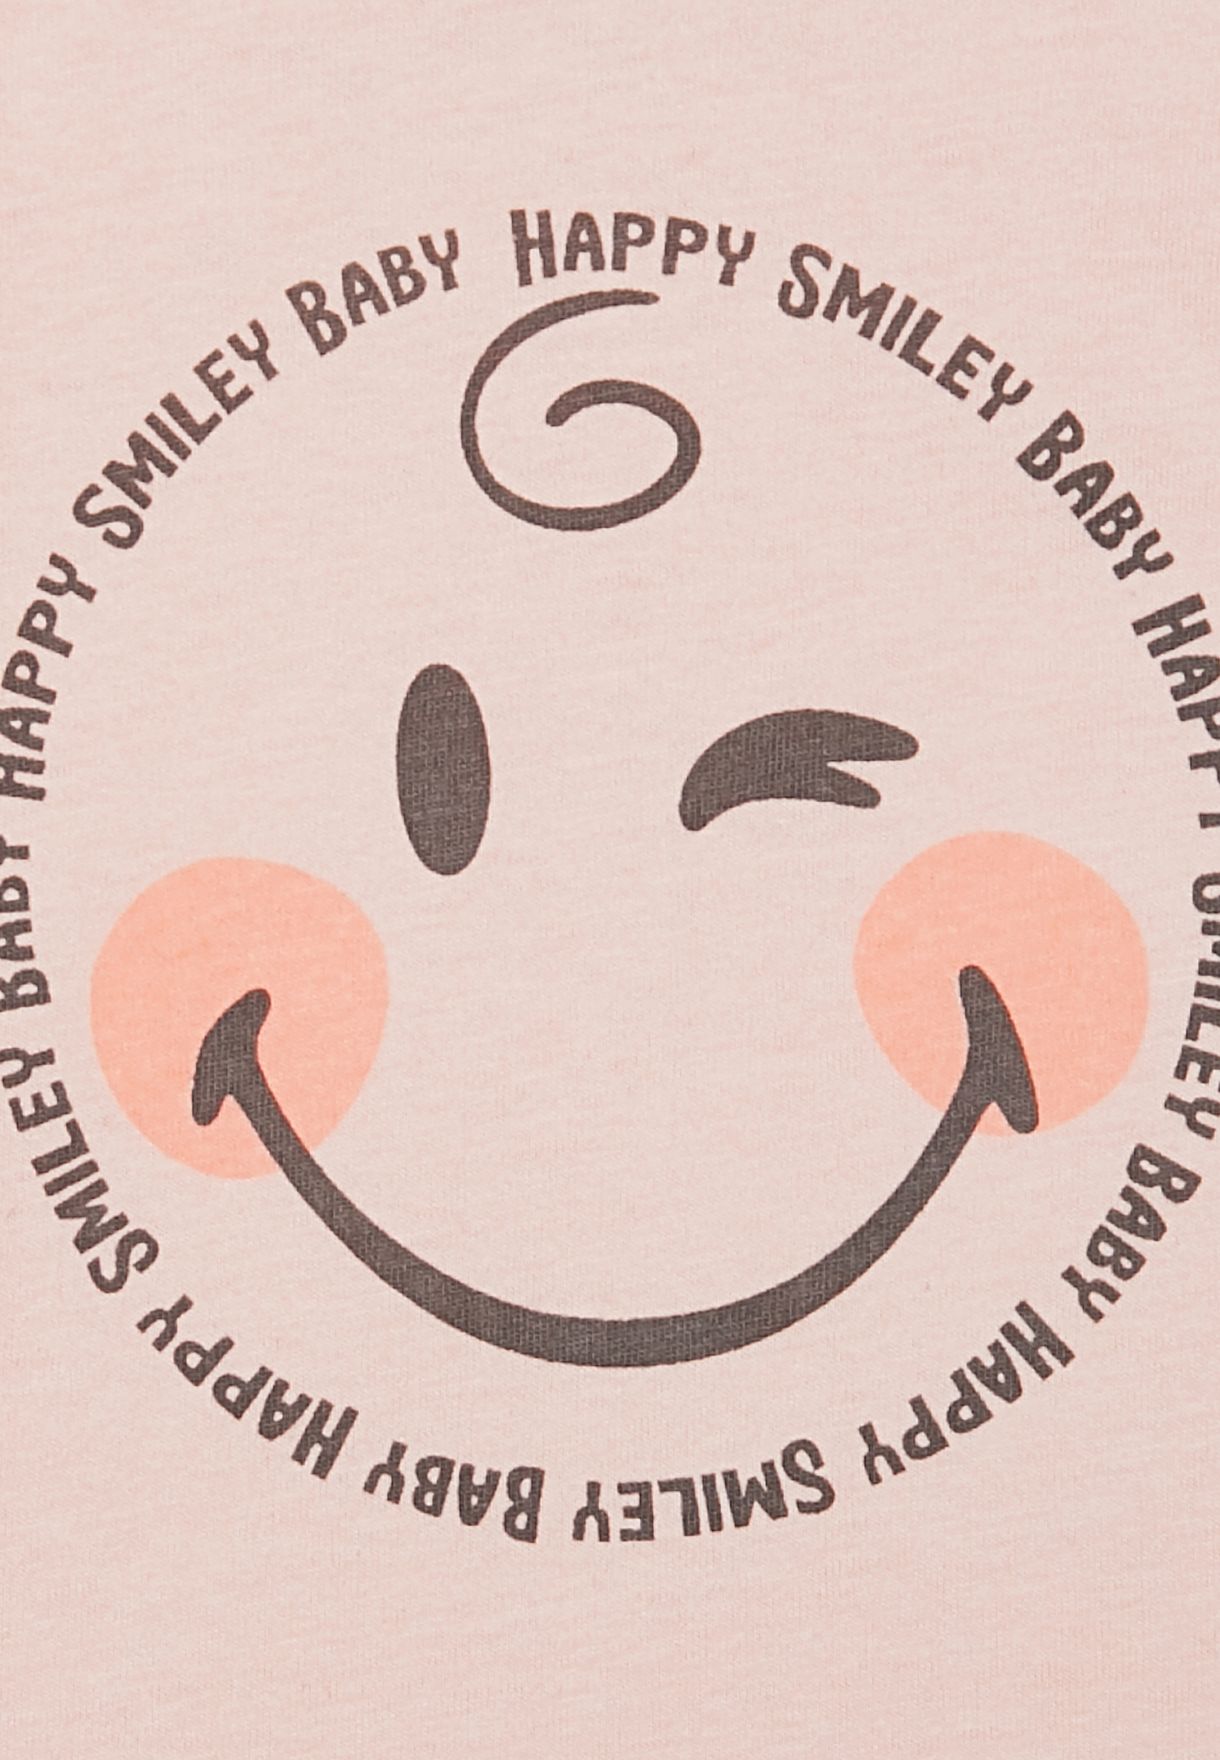 Infant Smiley T-Shirt